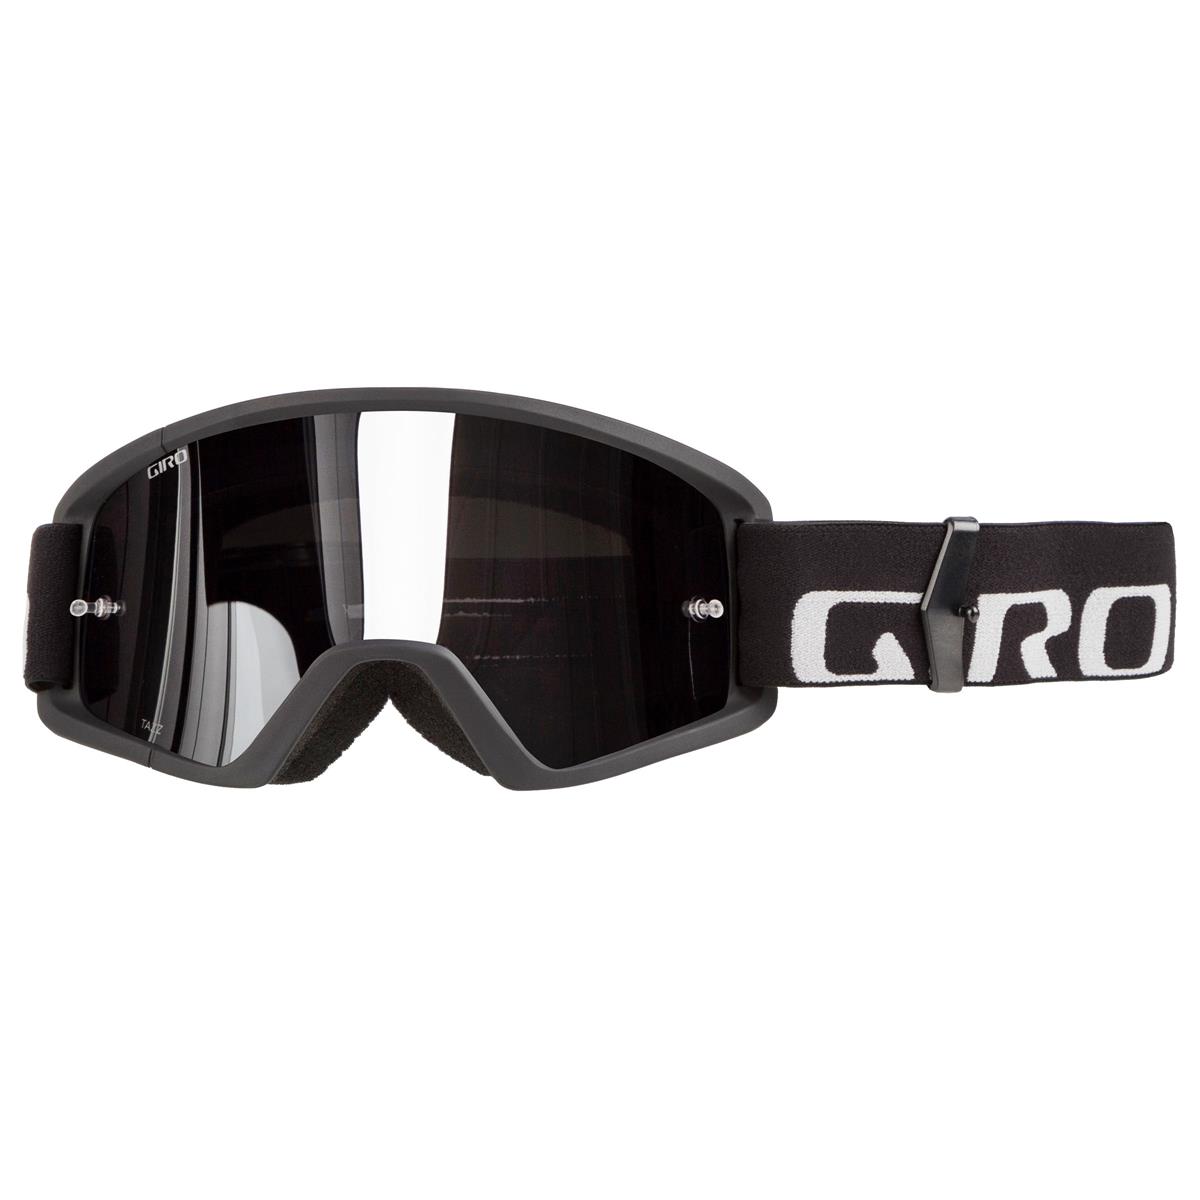 Giro Goggle Tazz Black/White - Grey/Silver Flash Clear Anti-Fog